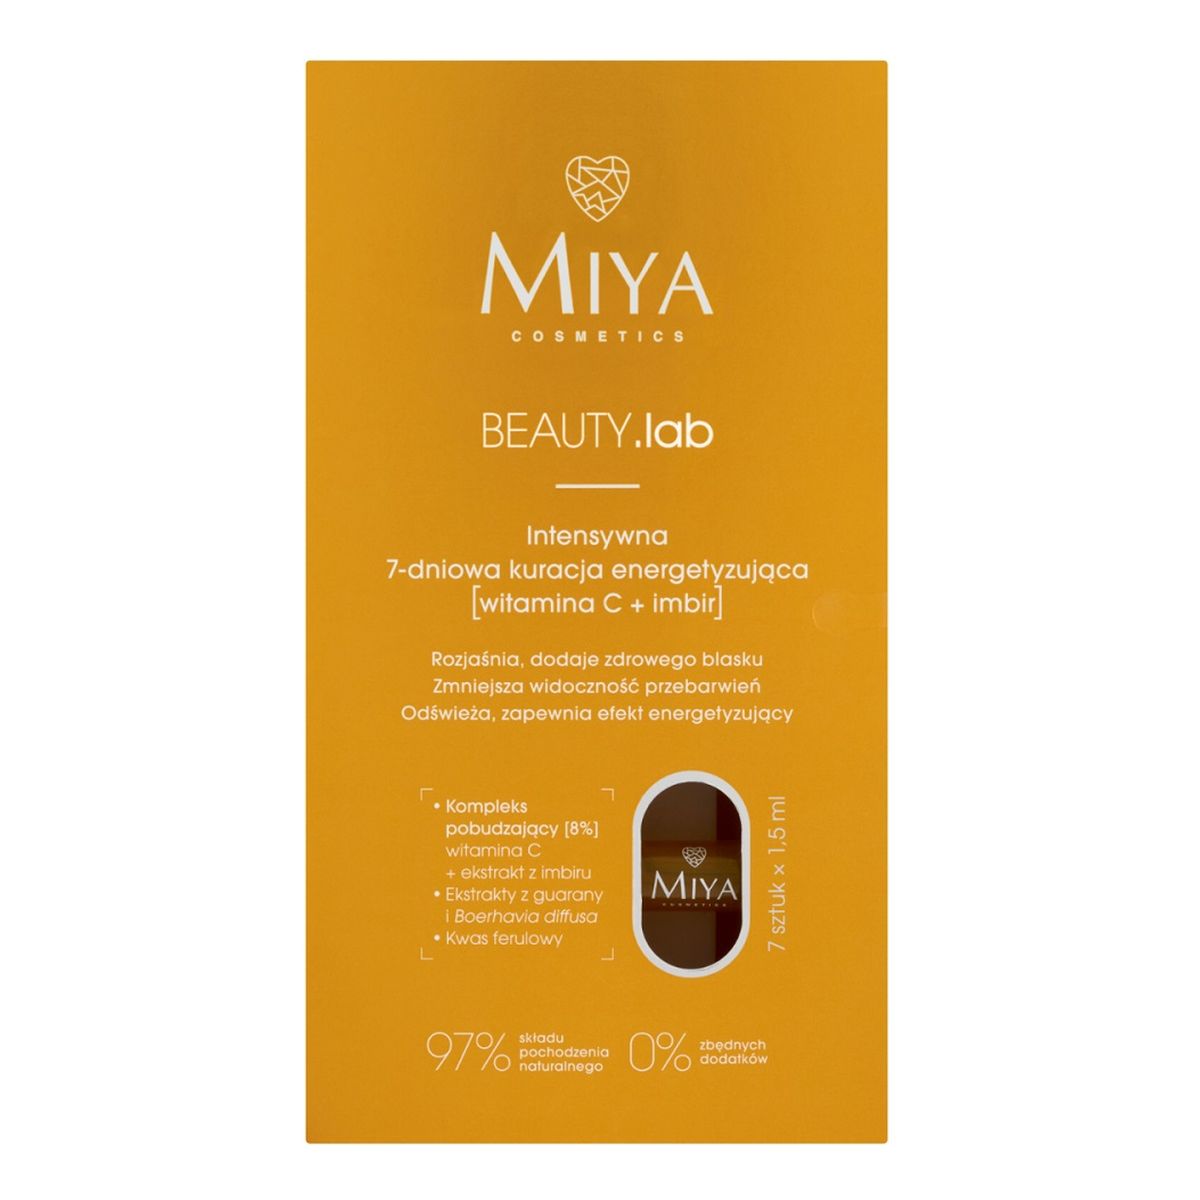 Miya Cosmetics Beauty.lab intensywna 7-dniowa kuracja energetyzująca &lsqb;witamina c + imbir&rsqb; 7x1.